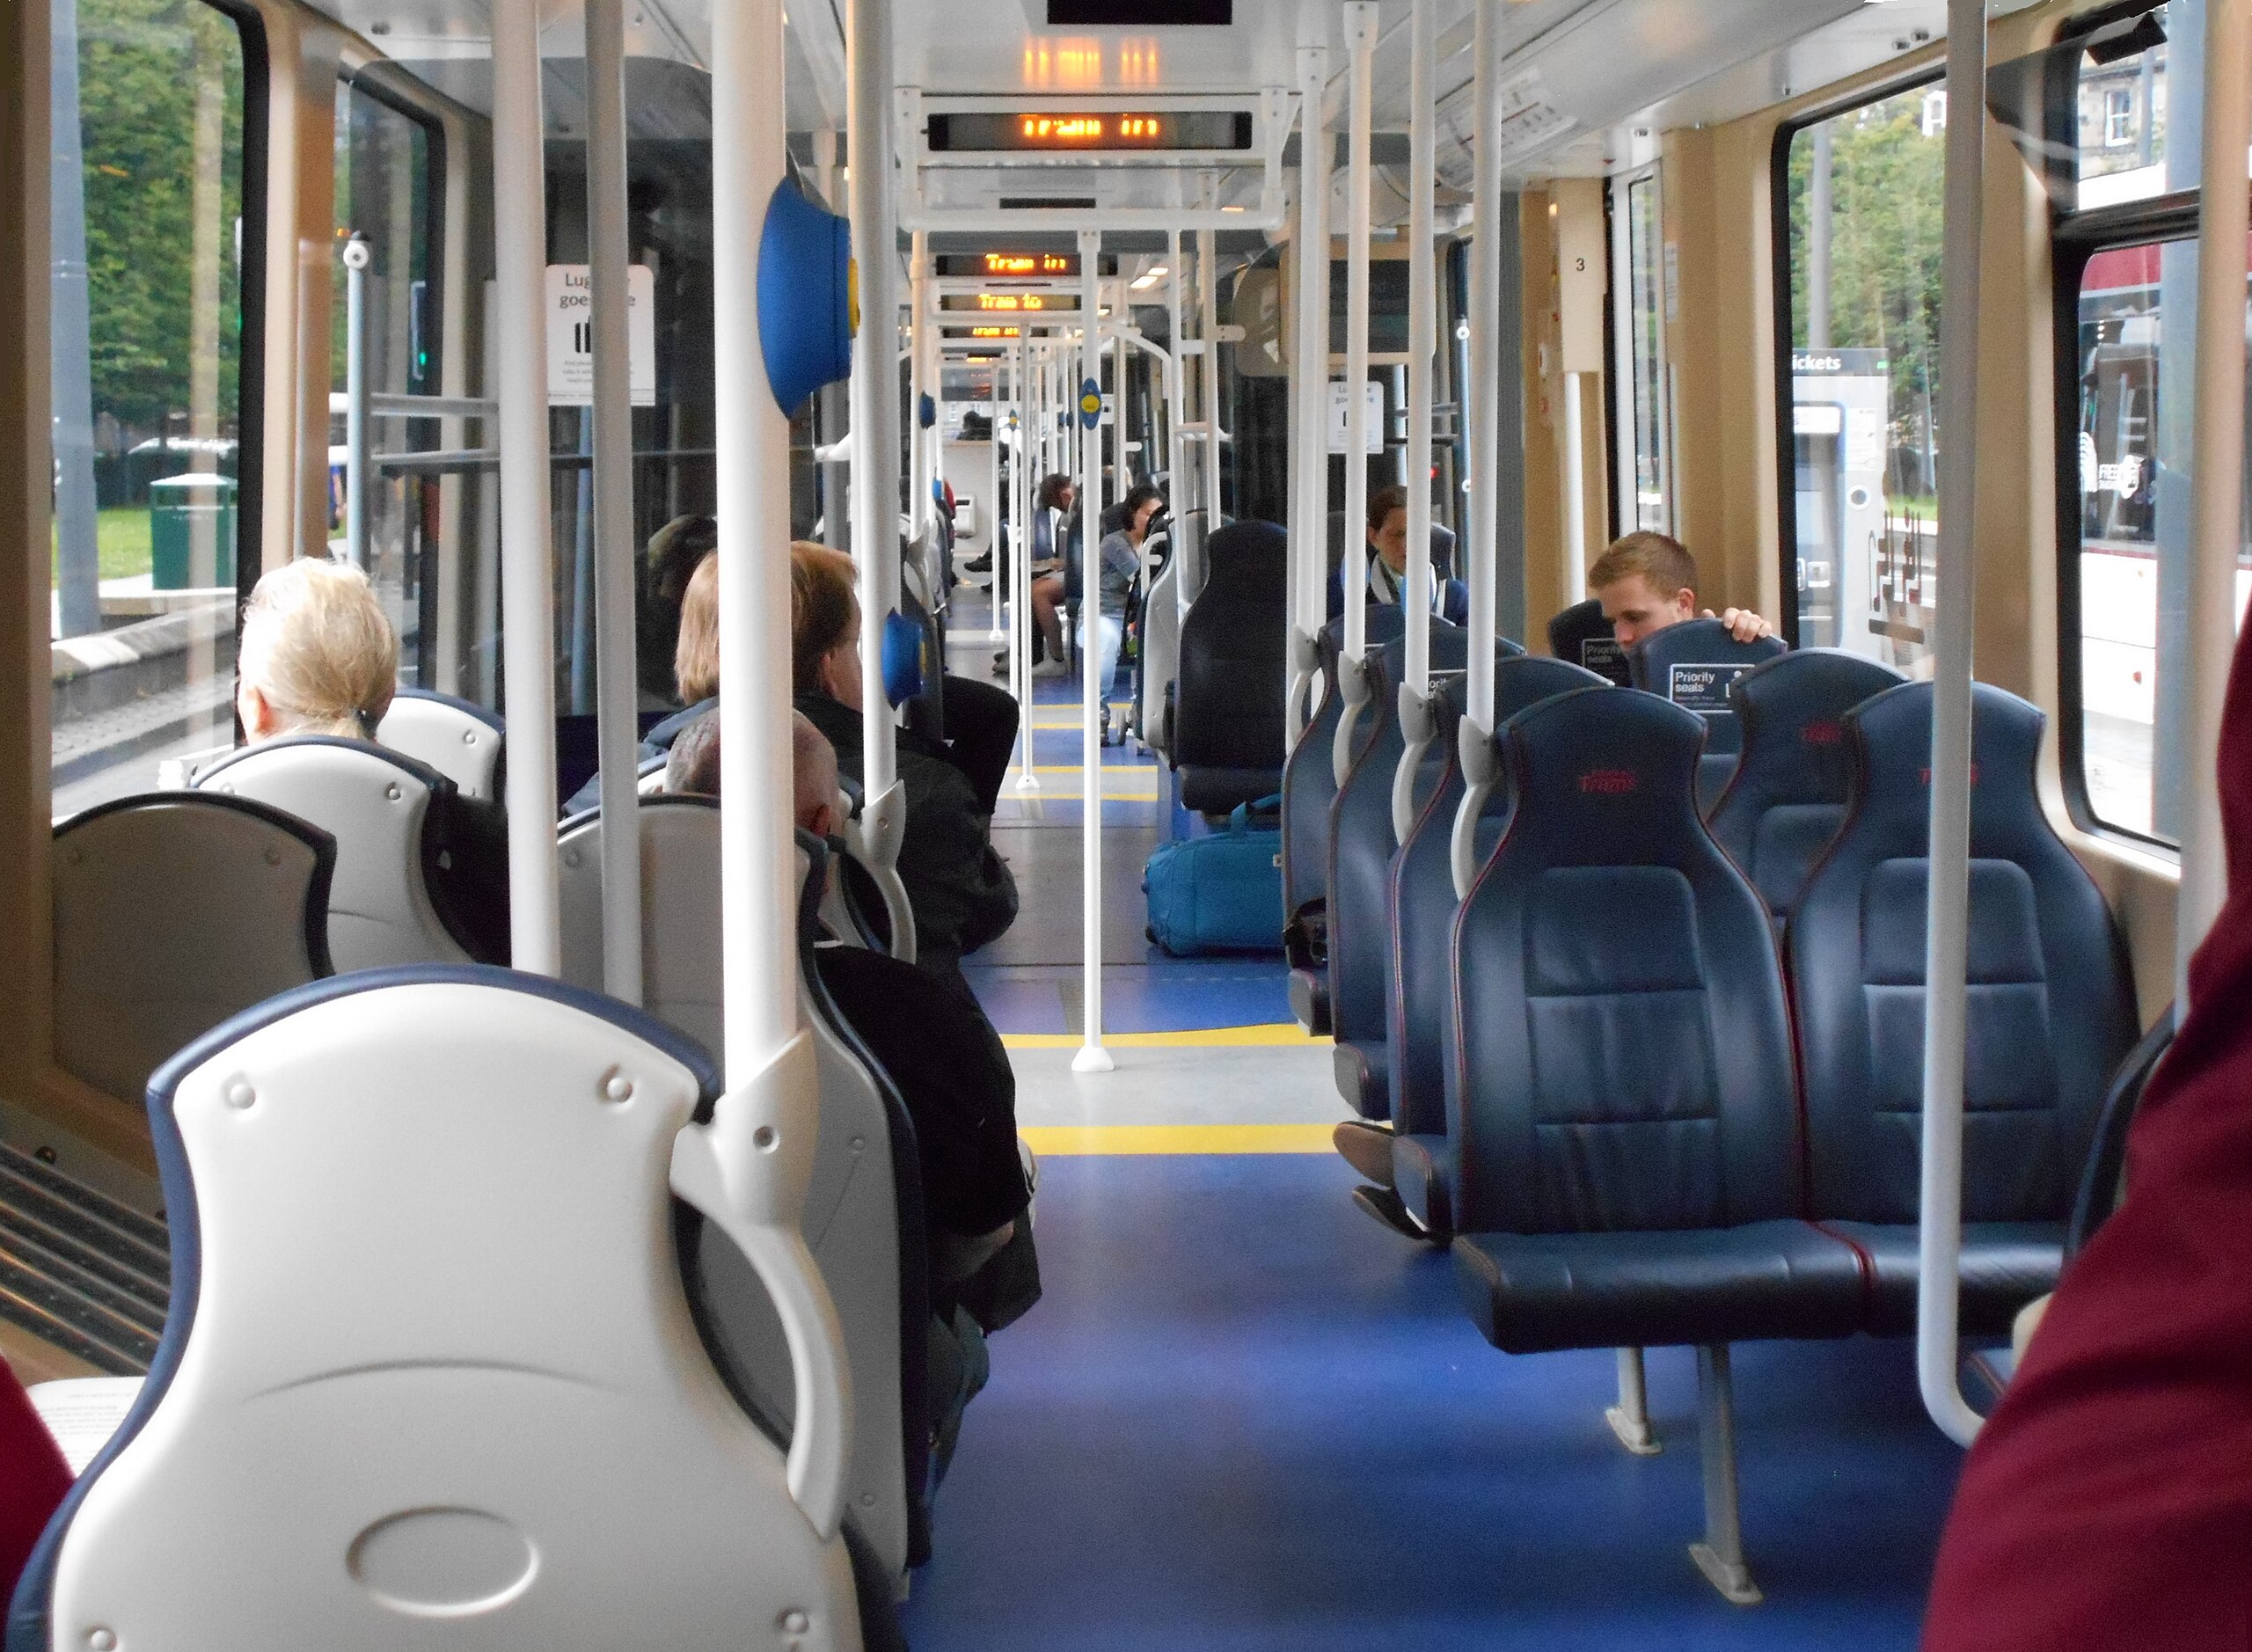 File:Tram interior edit1.jpg - Wikipedia